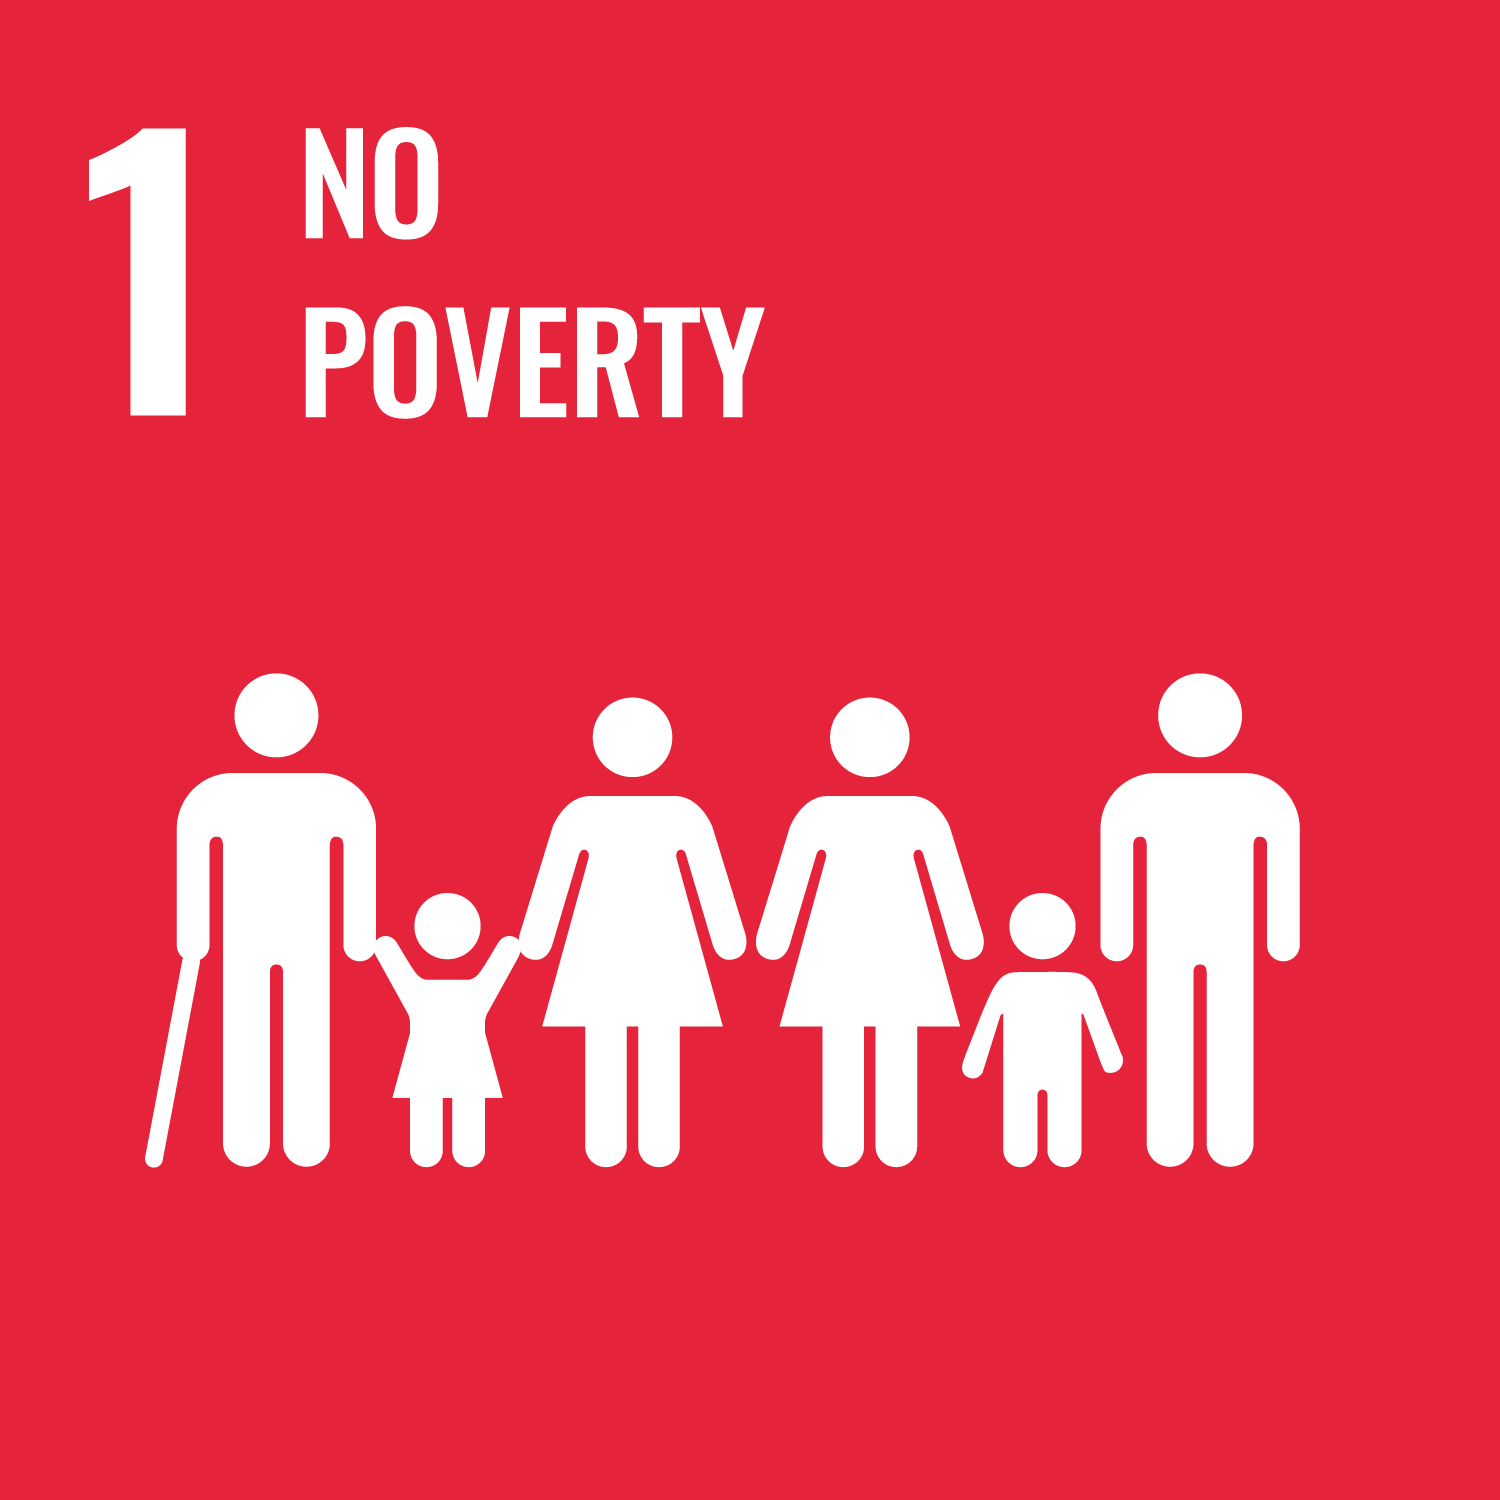 SDG 1. No poverty